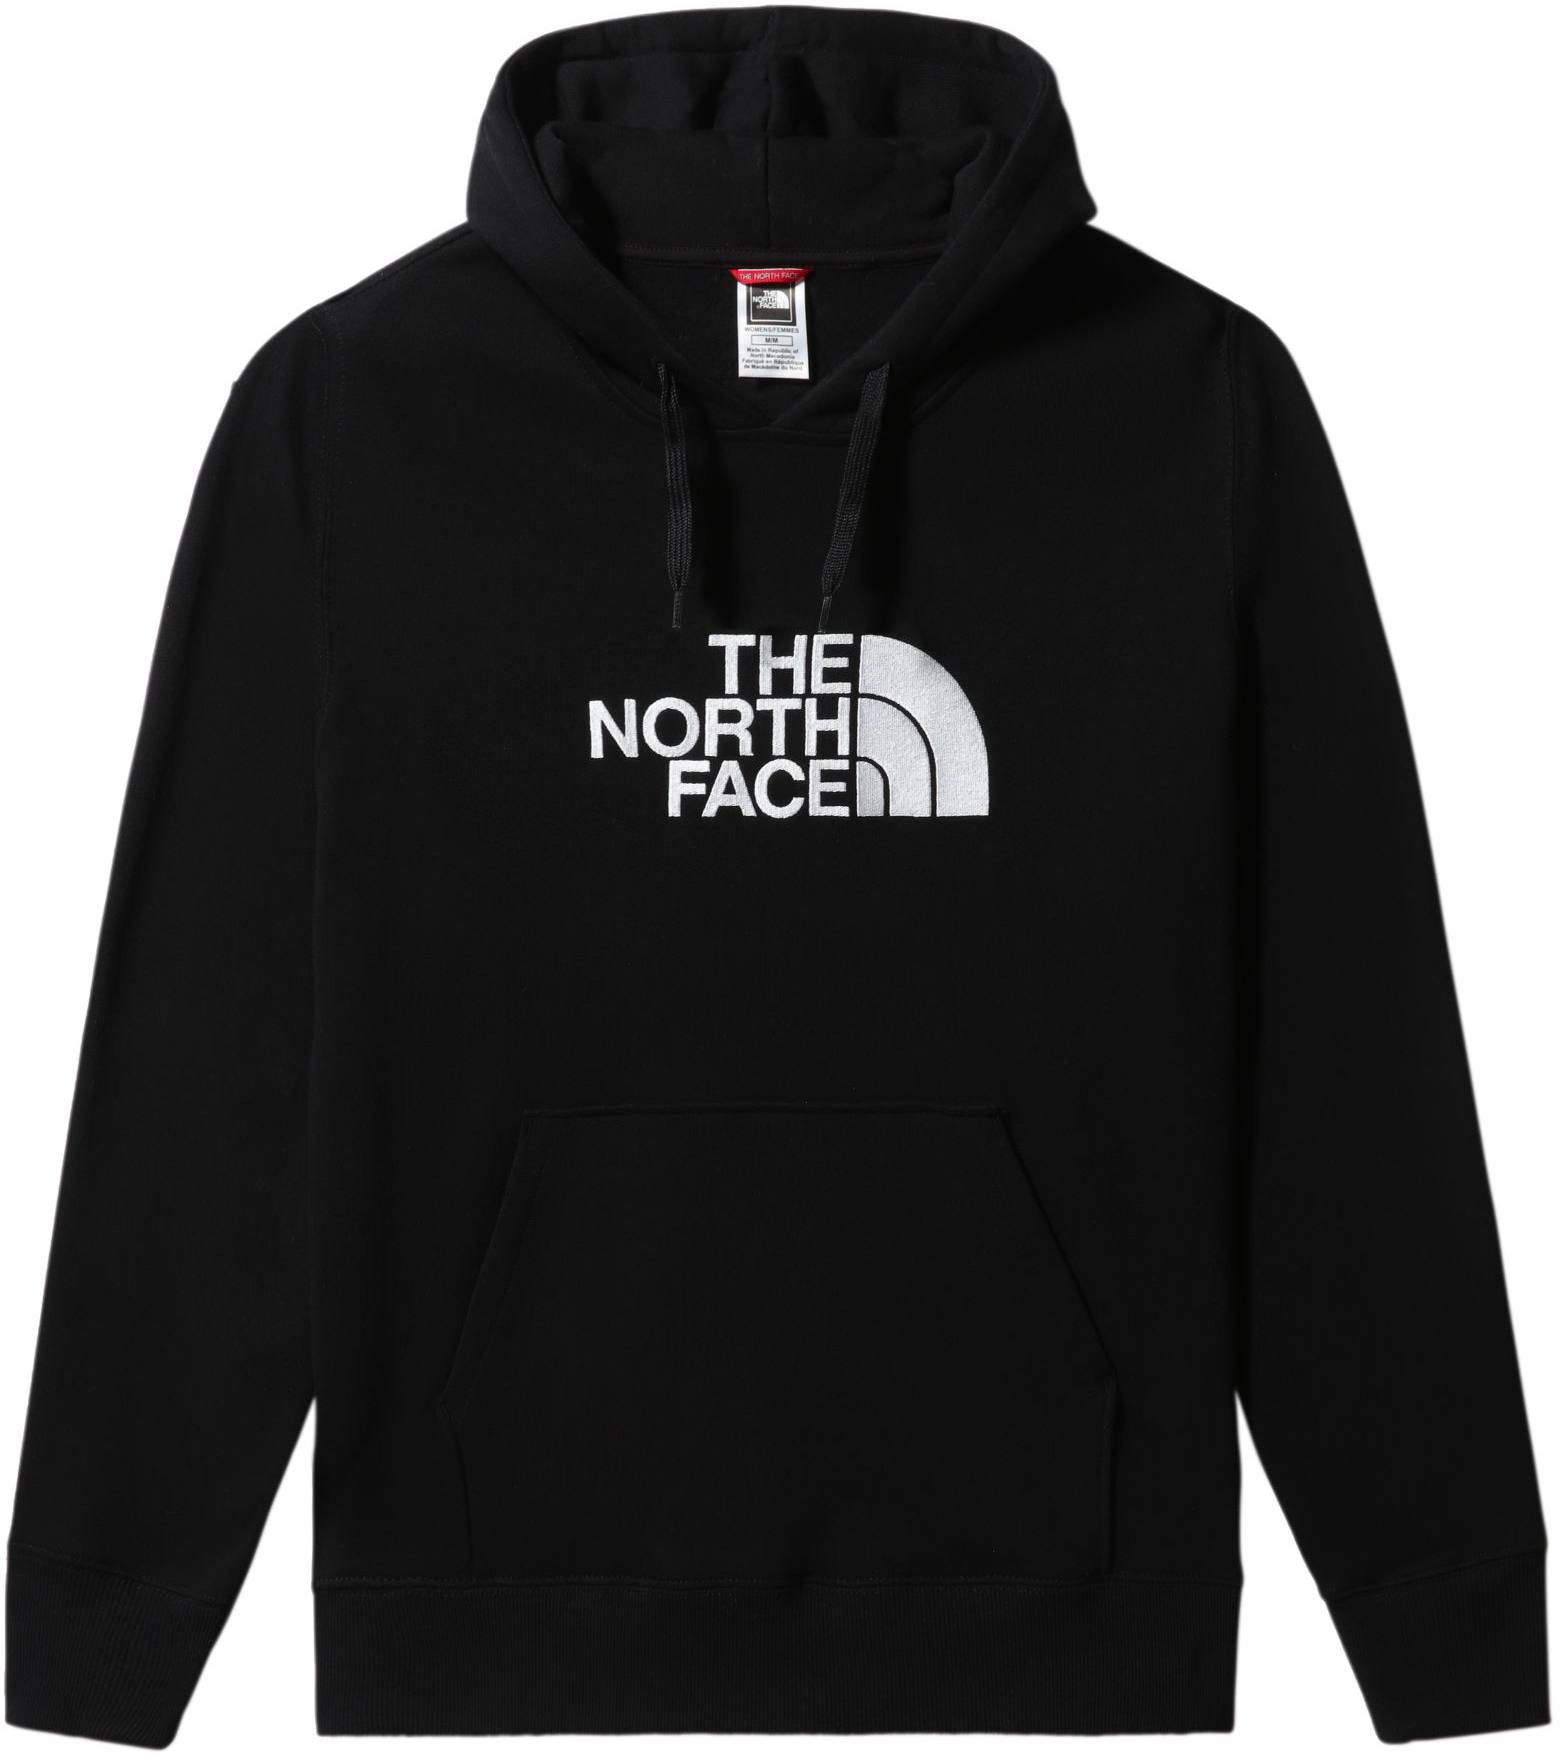 The North Face Women’s Drew Peak Pullover Hoodie